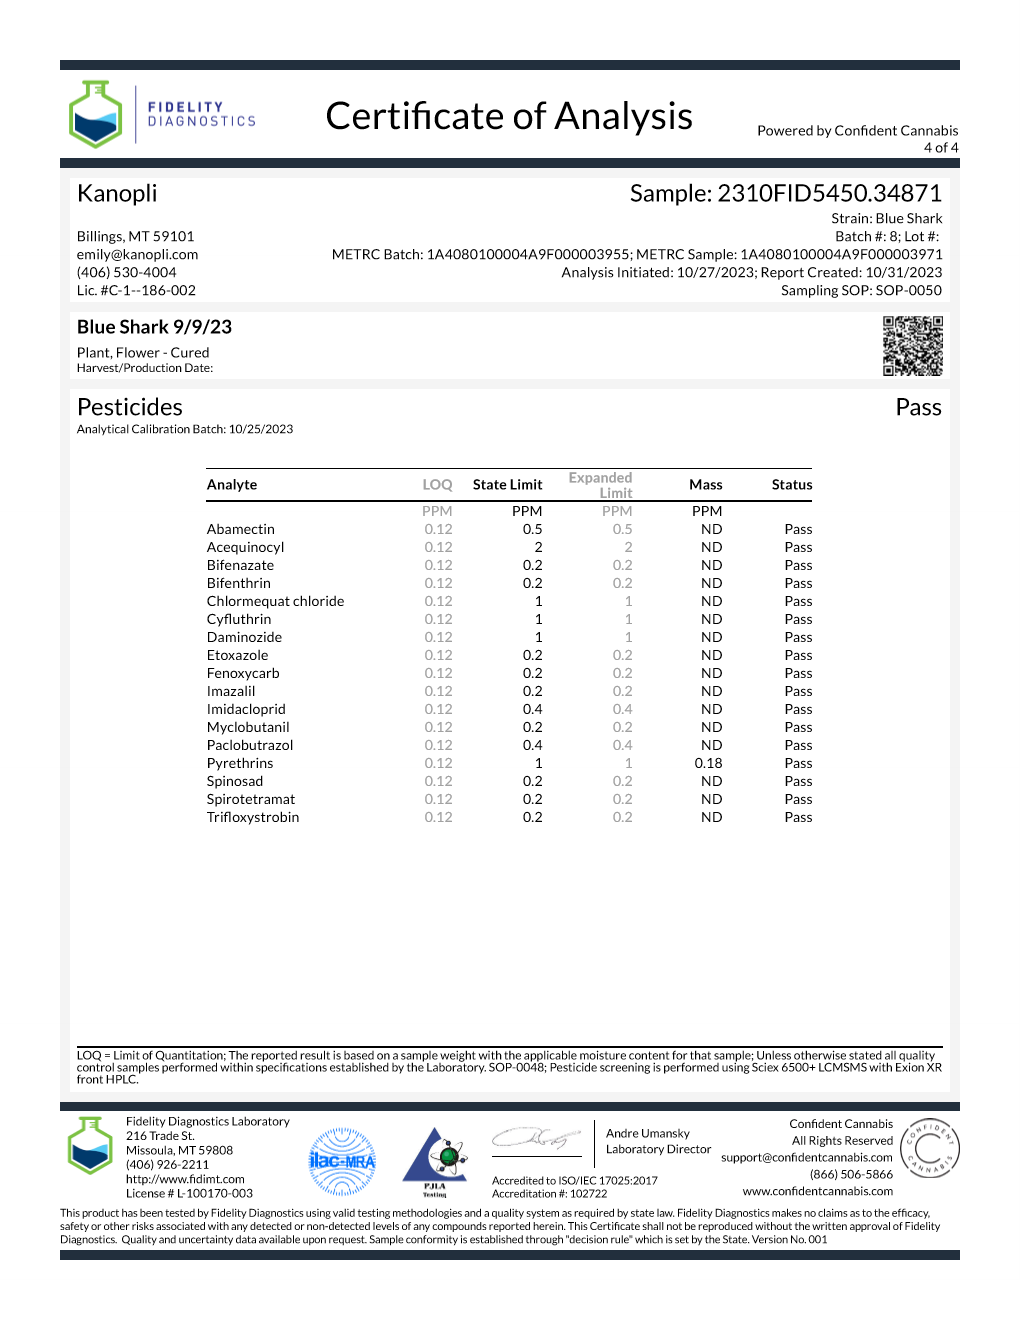 Adult Use - Blue Shark - Hybrid 18.18% THC (Sept. 2023)